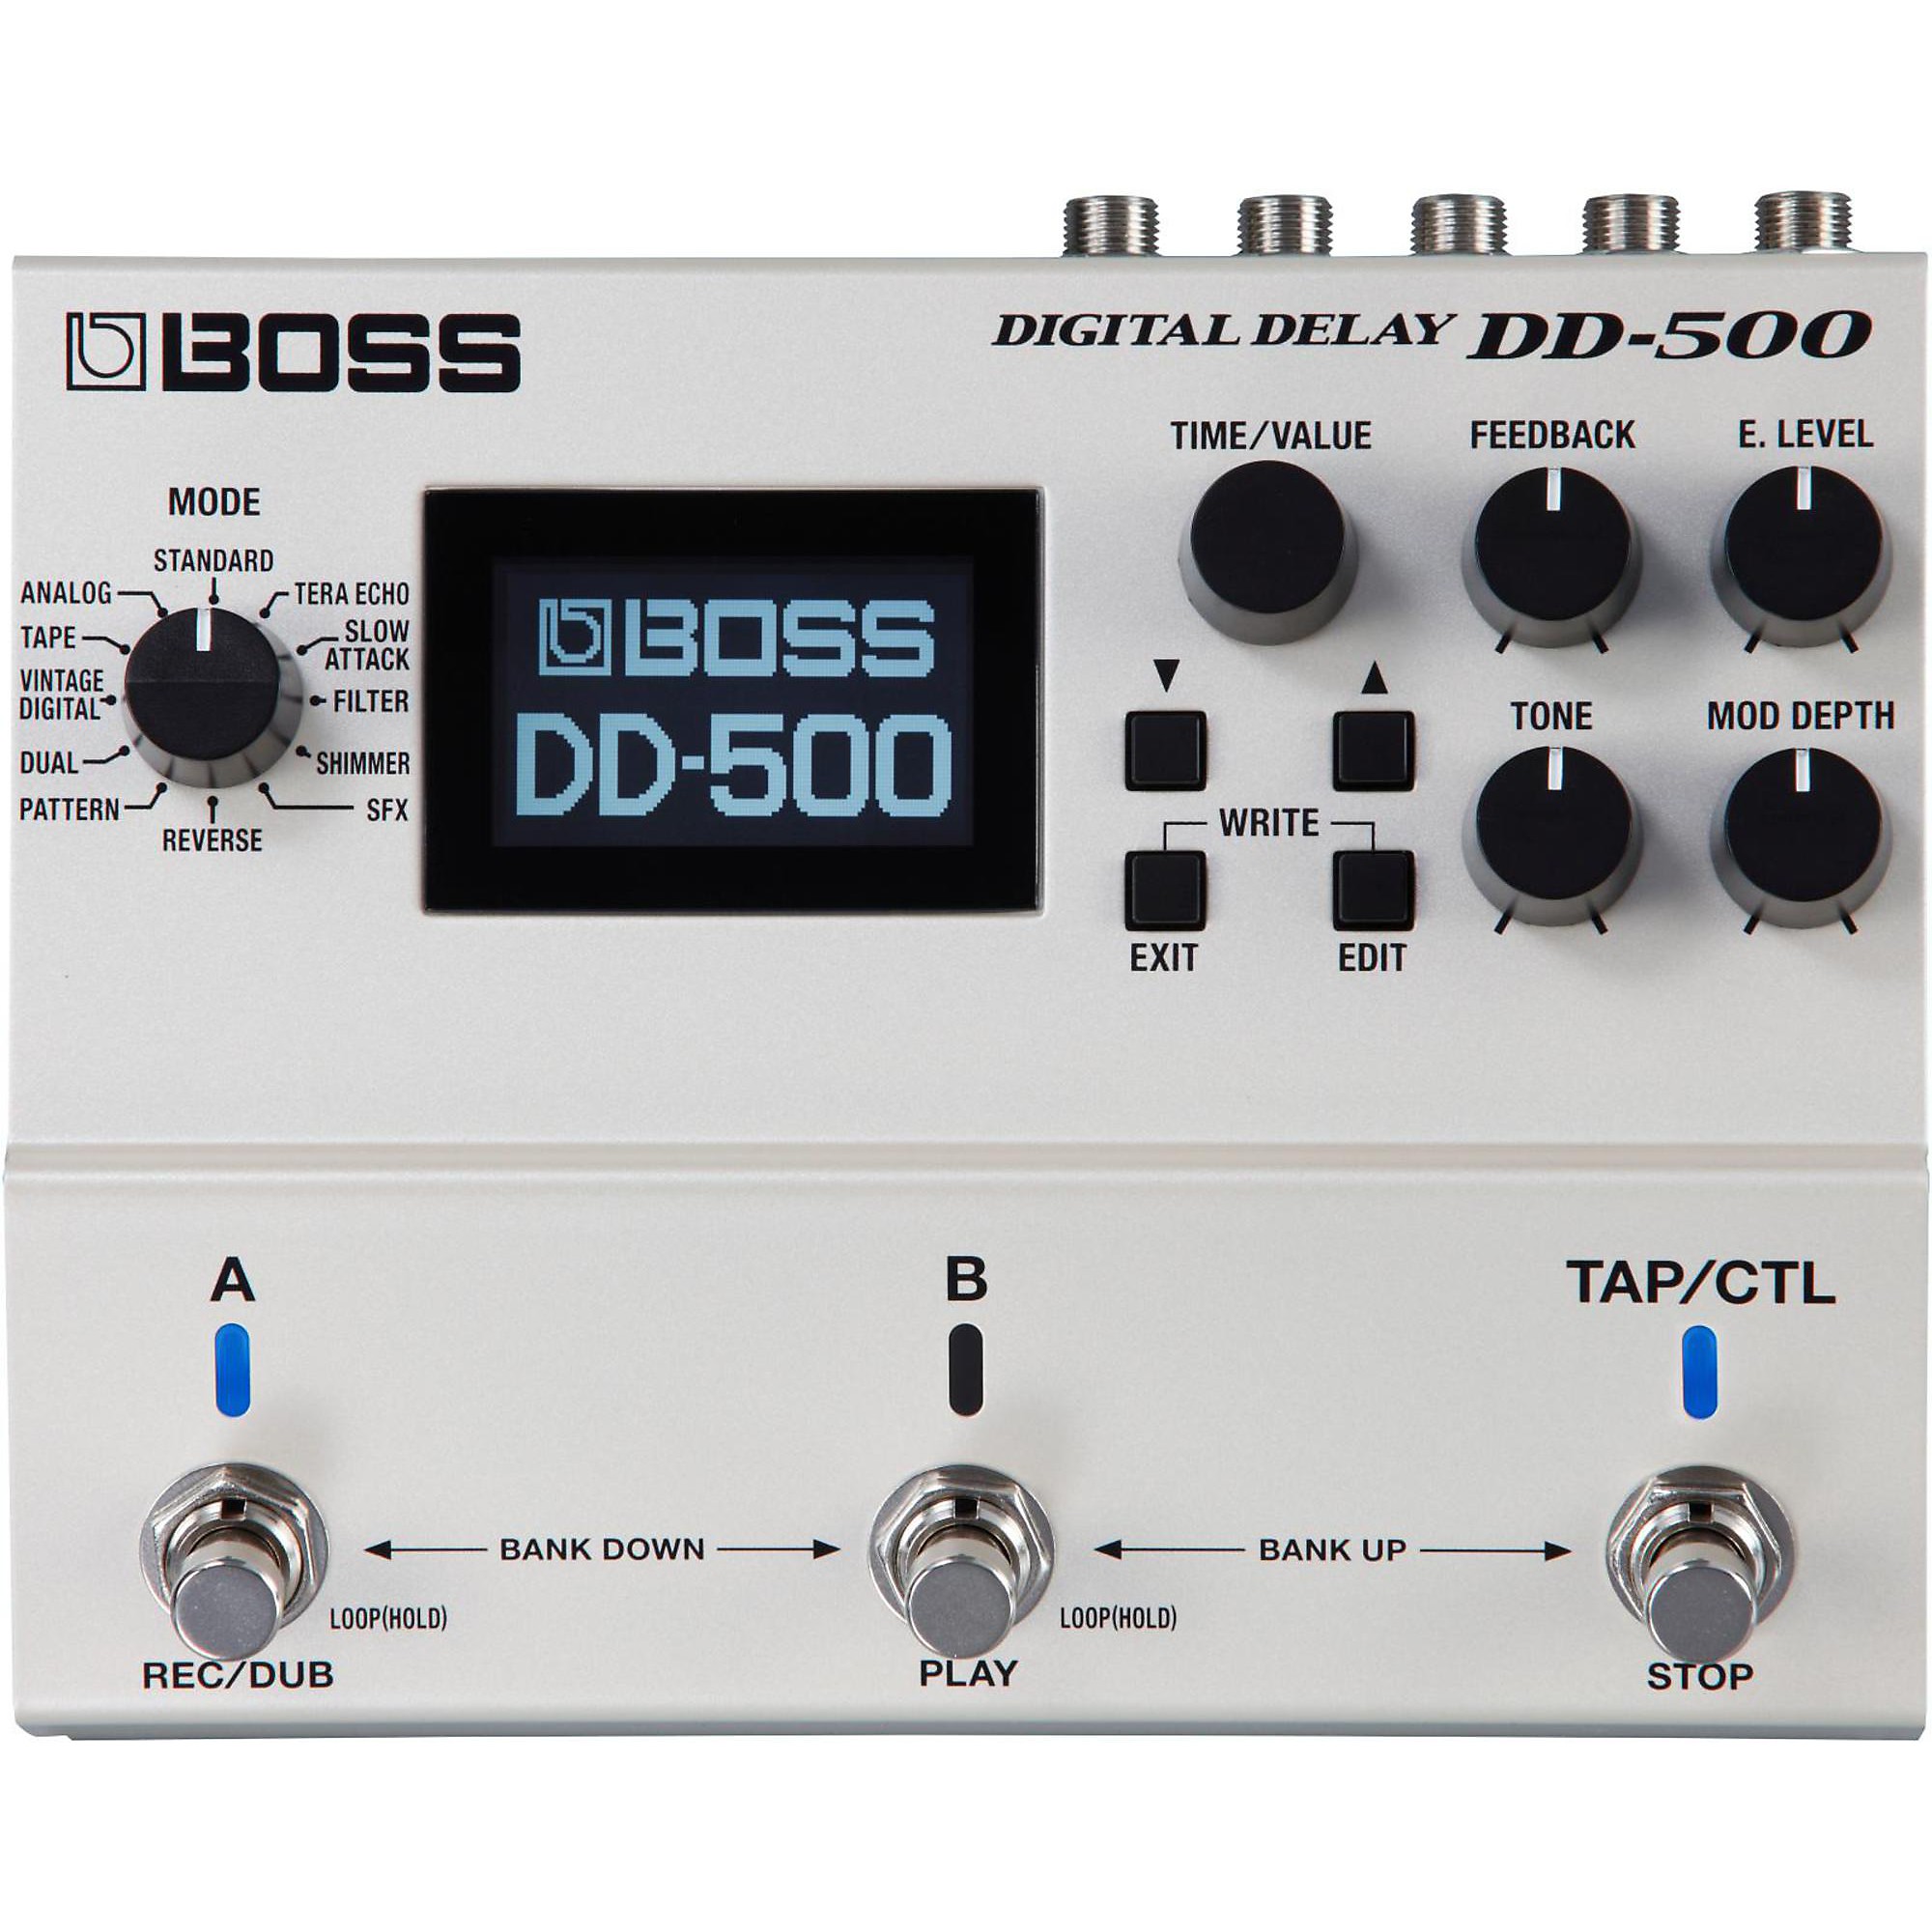 BOSS DD-500 Digital Delay Guitar Effects Pedal | Guitar Center